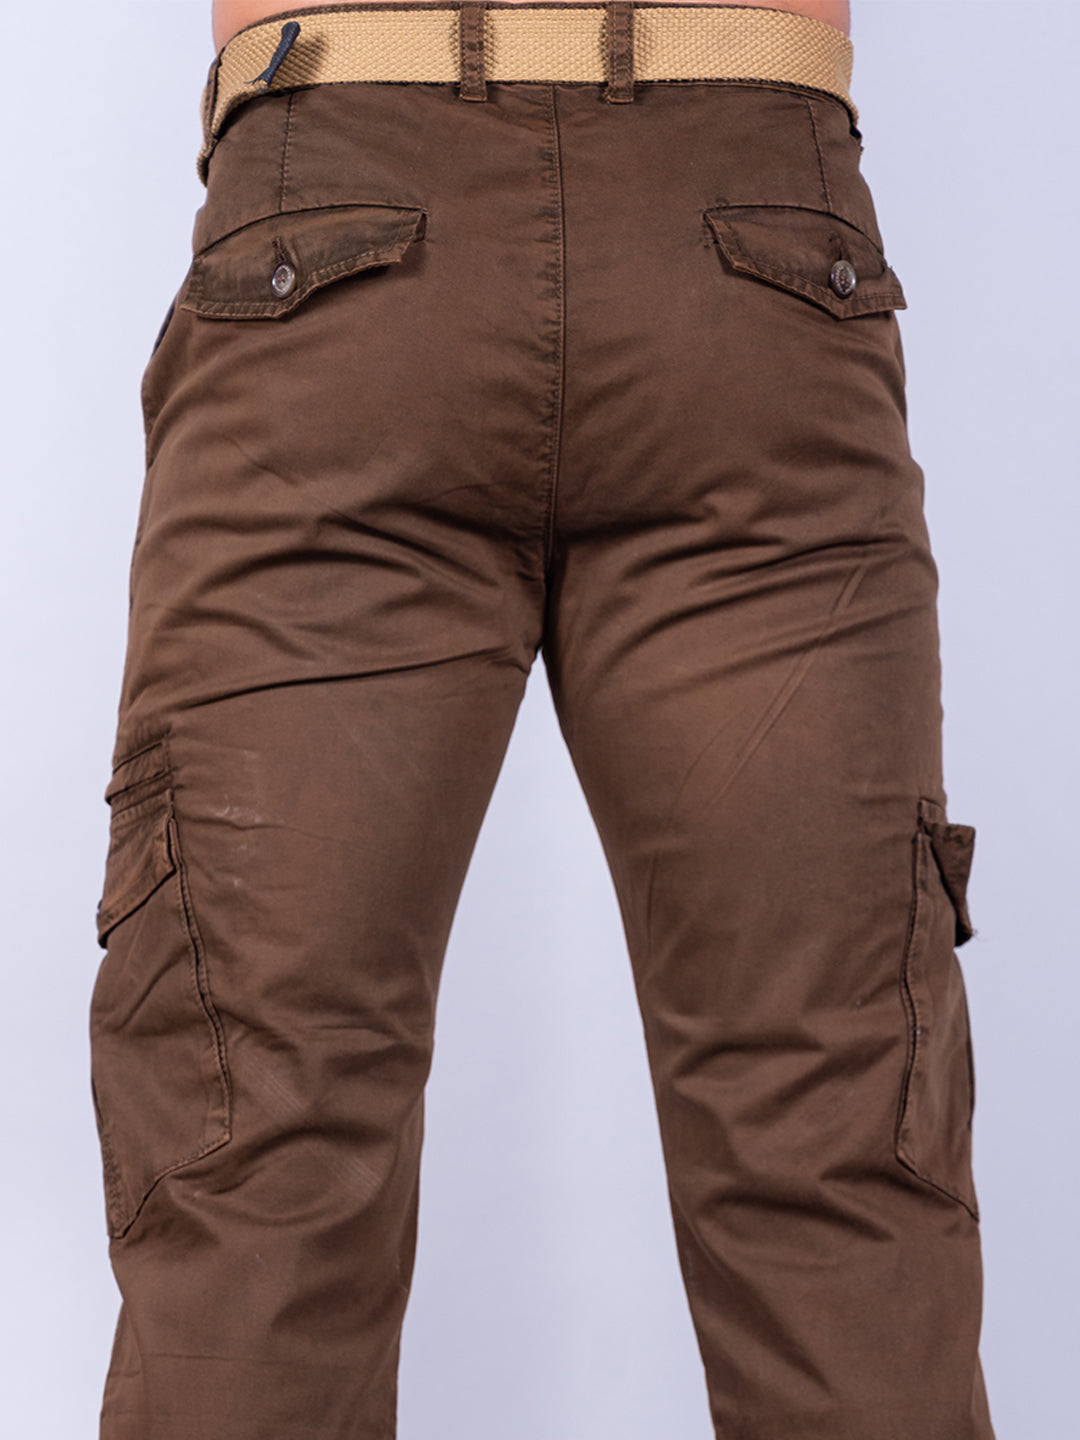 TRGPSG Men's Cargo Pants with Multi Pockets Outdoor Cotton Work Pants(No  Belt),Khaki 29 - Walmart.com